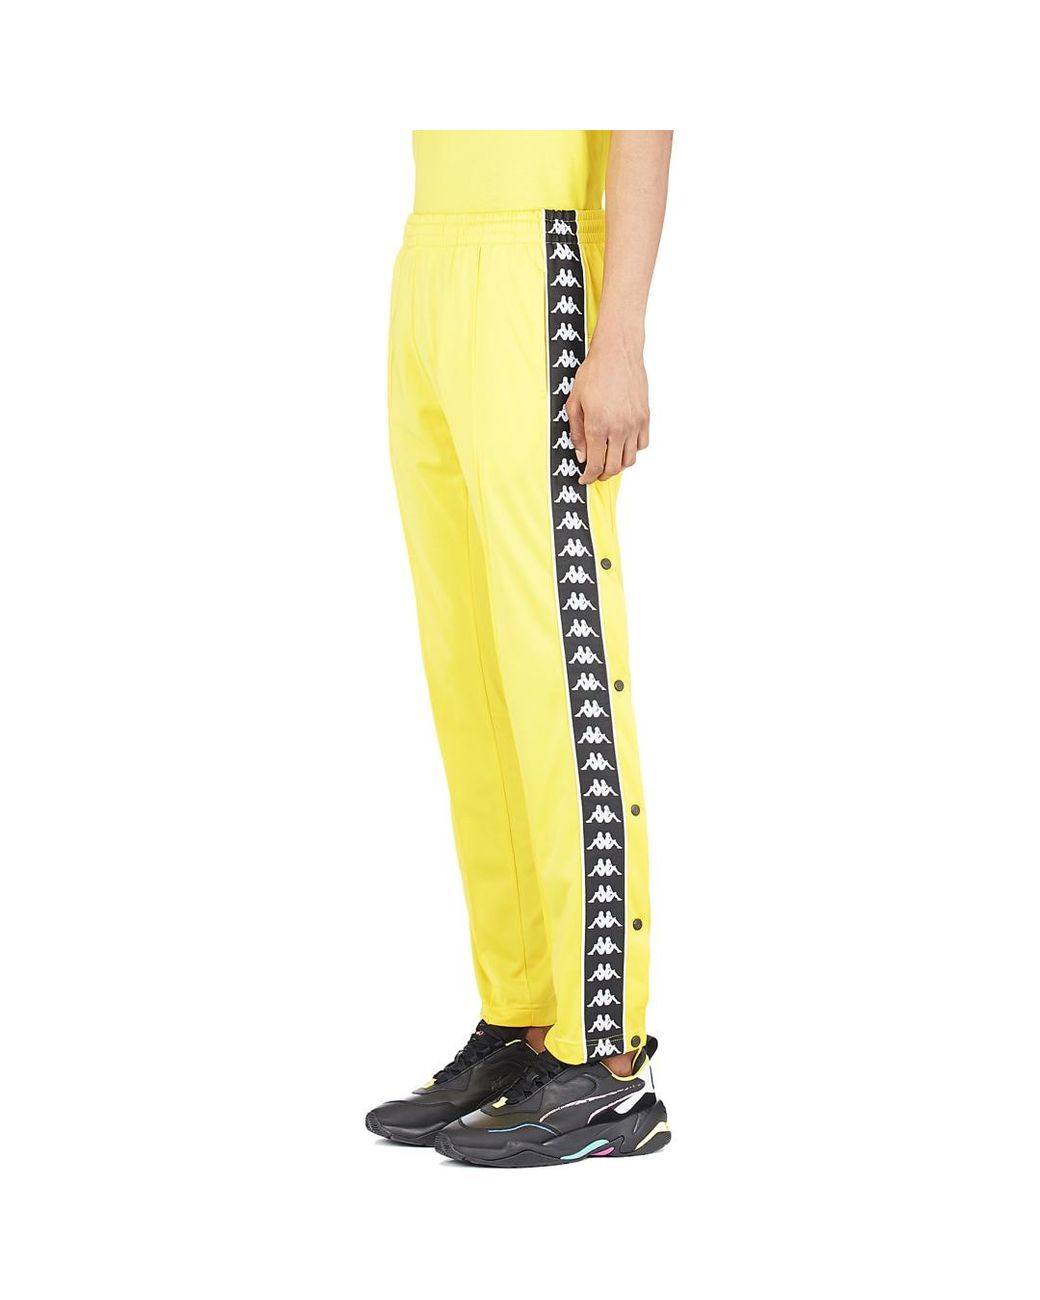 Kappa Synthetic 222 Banda Astoria Slim Snap Track Pants in Yellow/Black/White  (Yellow) for Men - Lyst